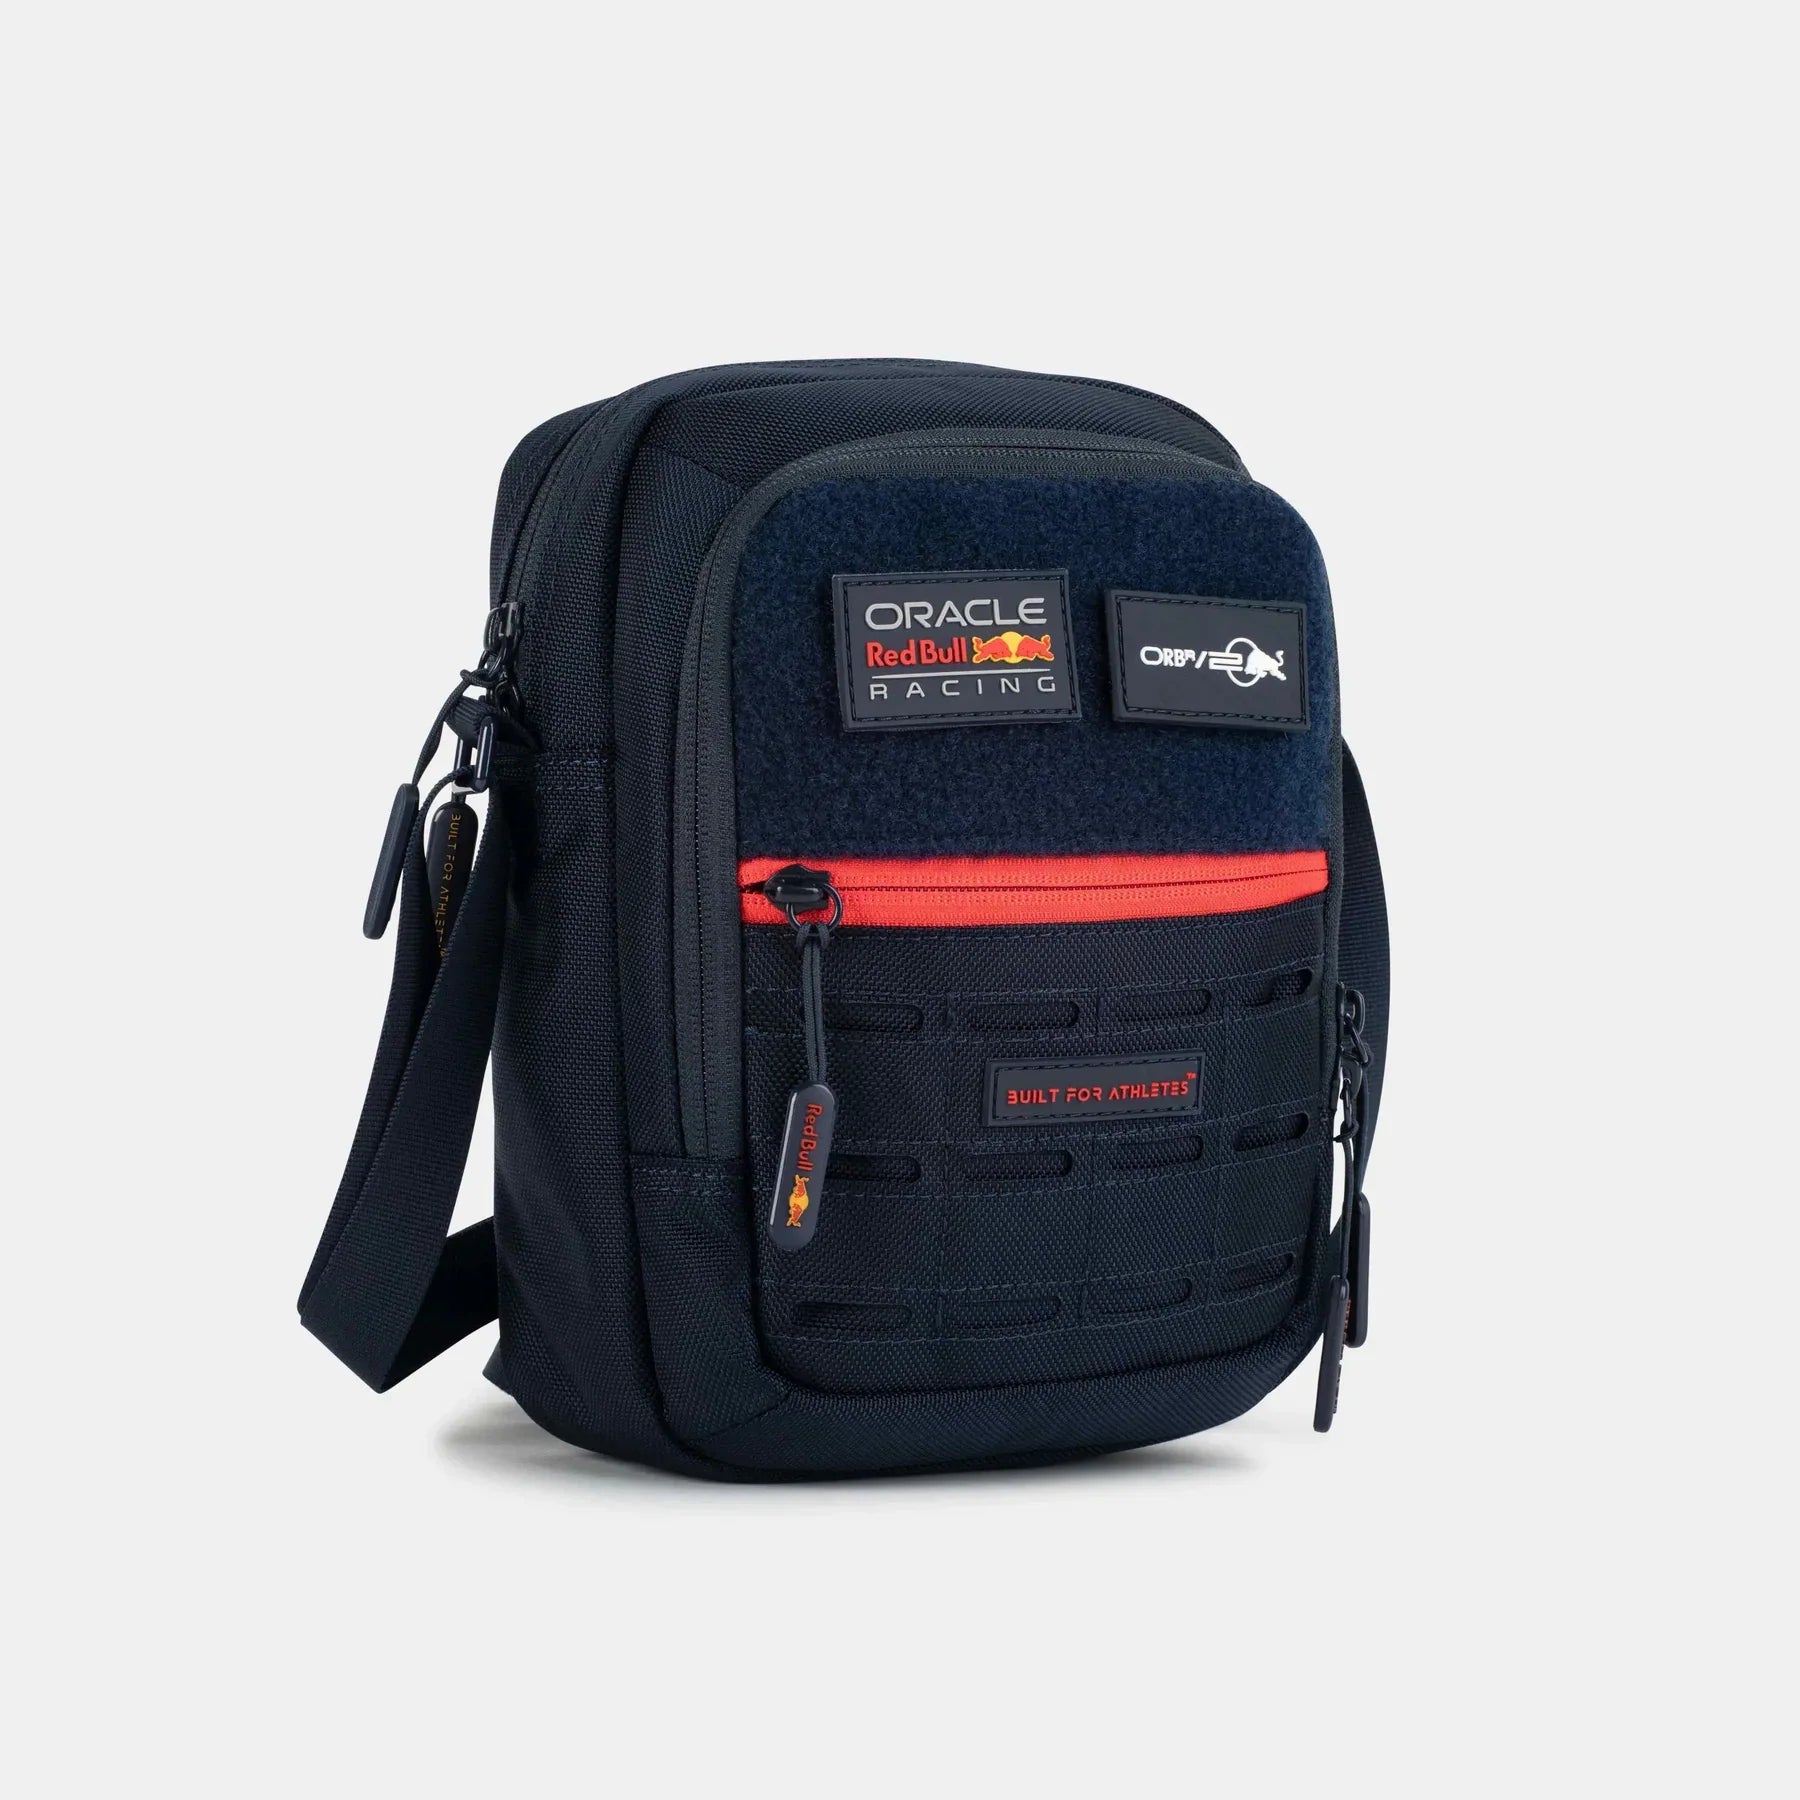 Oracle Red Bull Racing Shoulder Bag